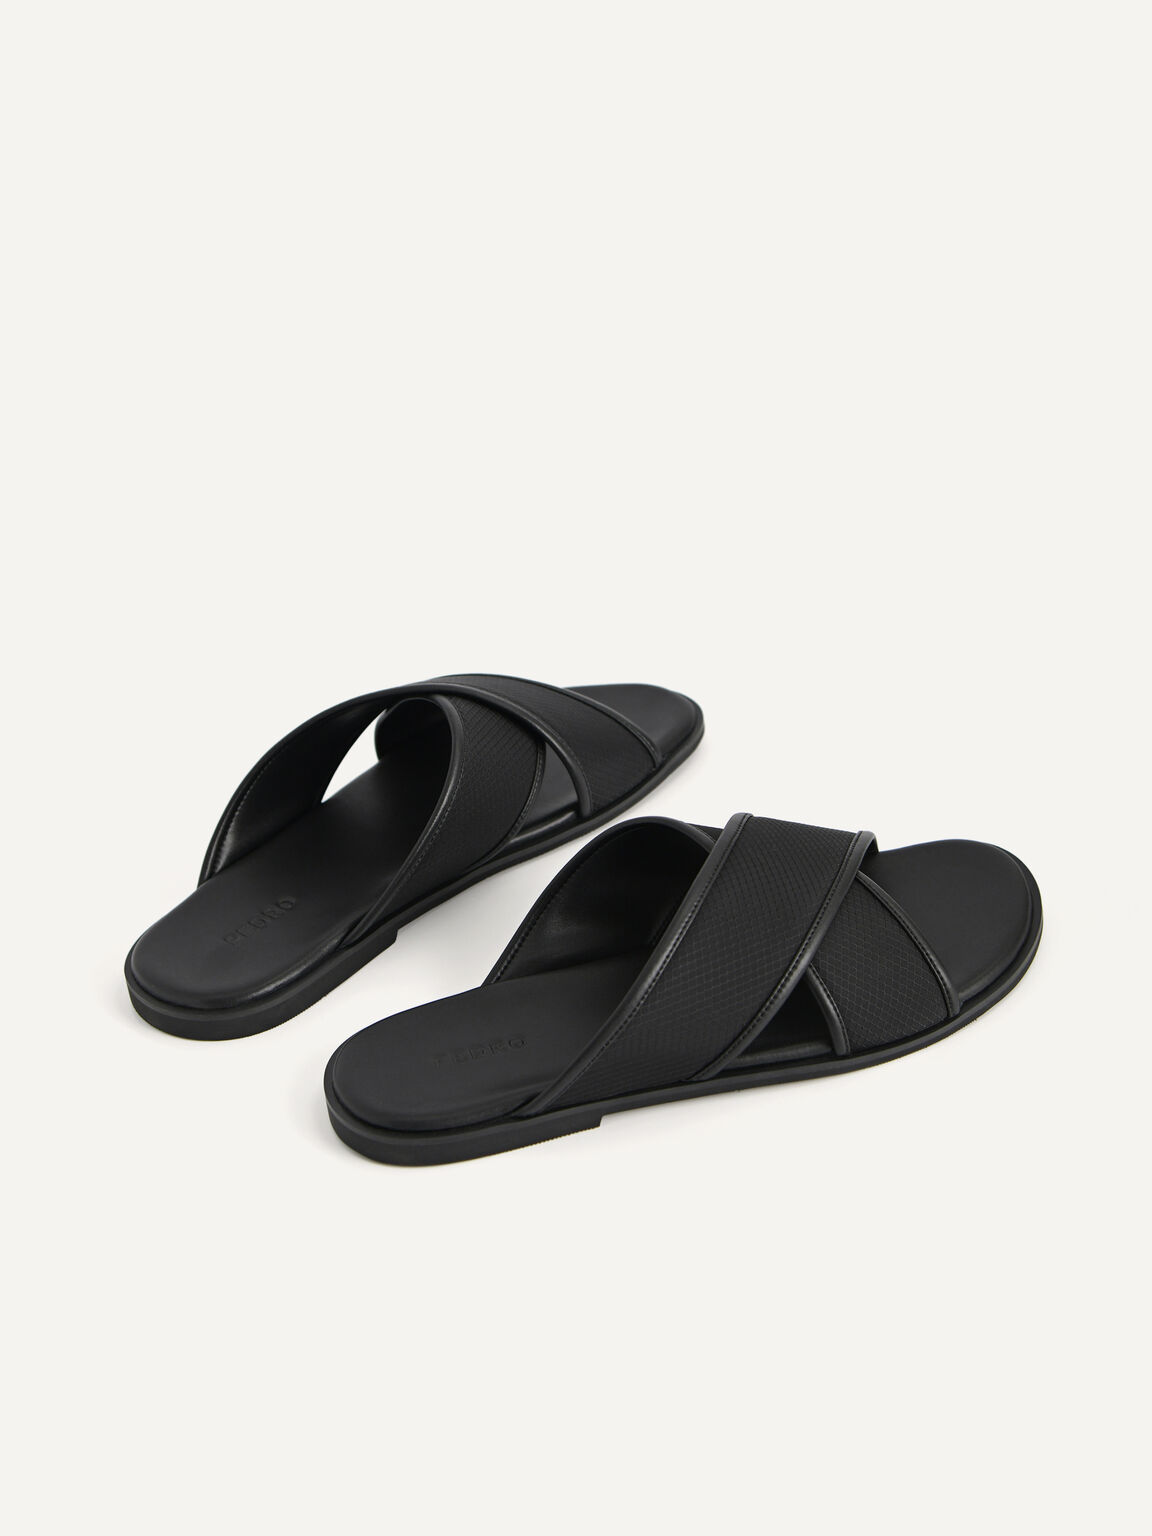 Criss-Cross Strap Sandals, Black